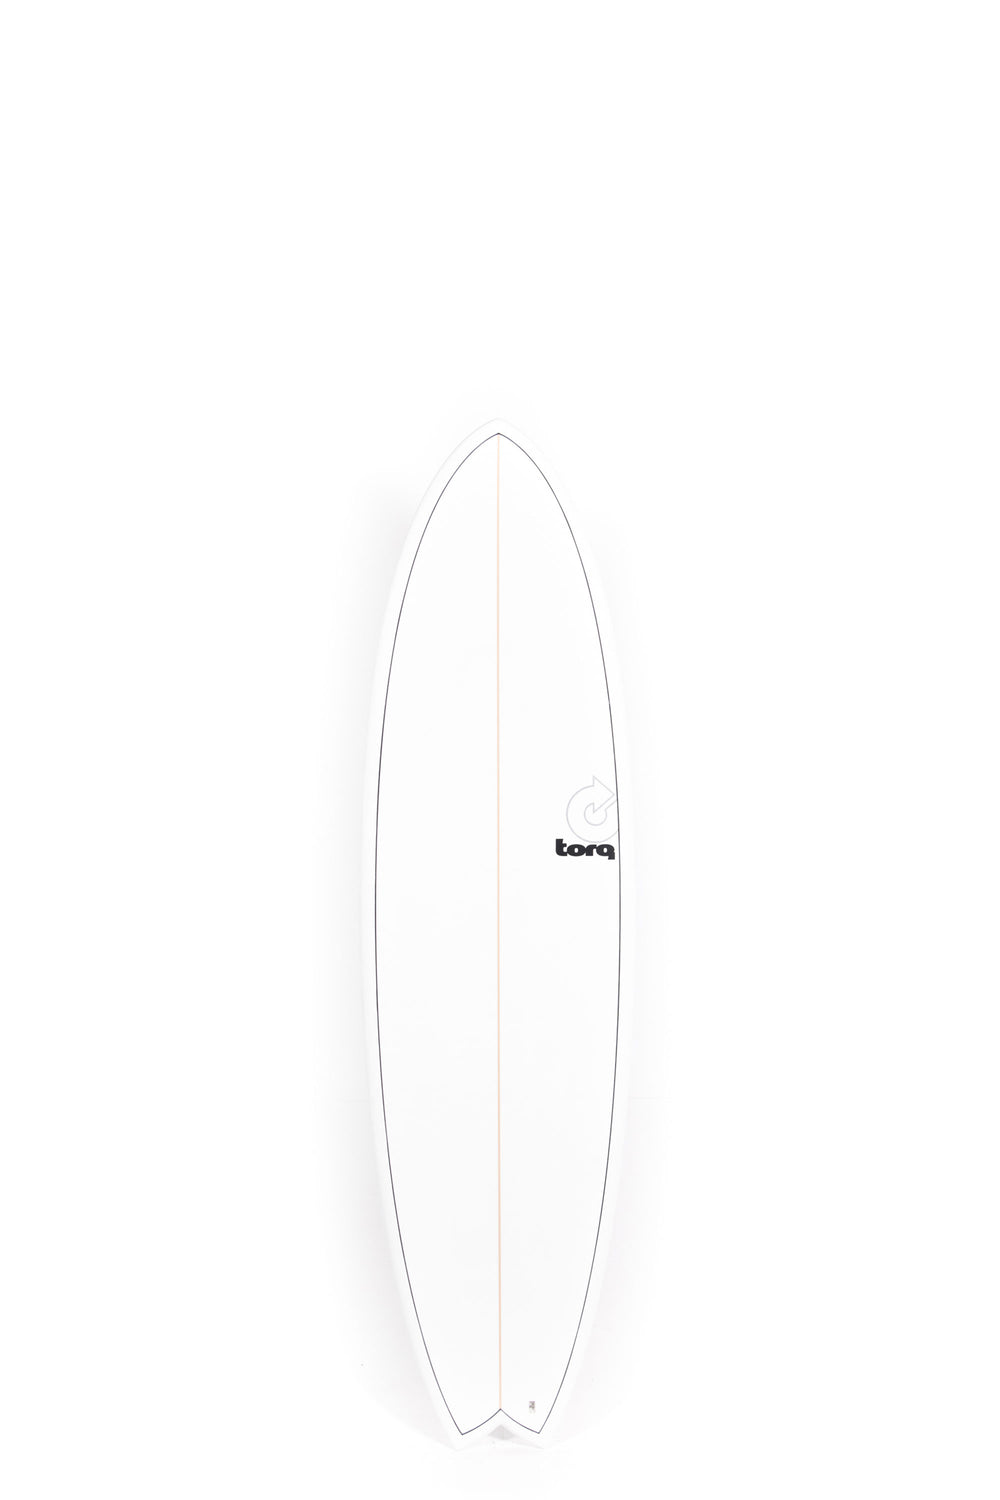 Torq Surfboards - MODFISH - 6'6